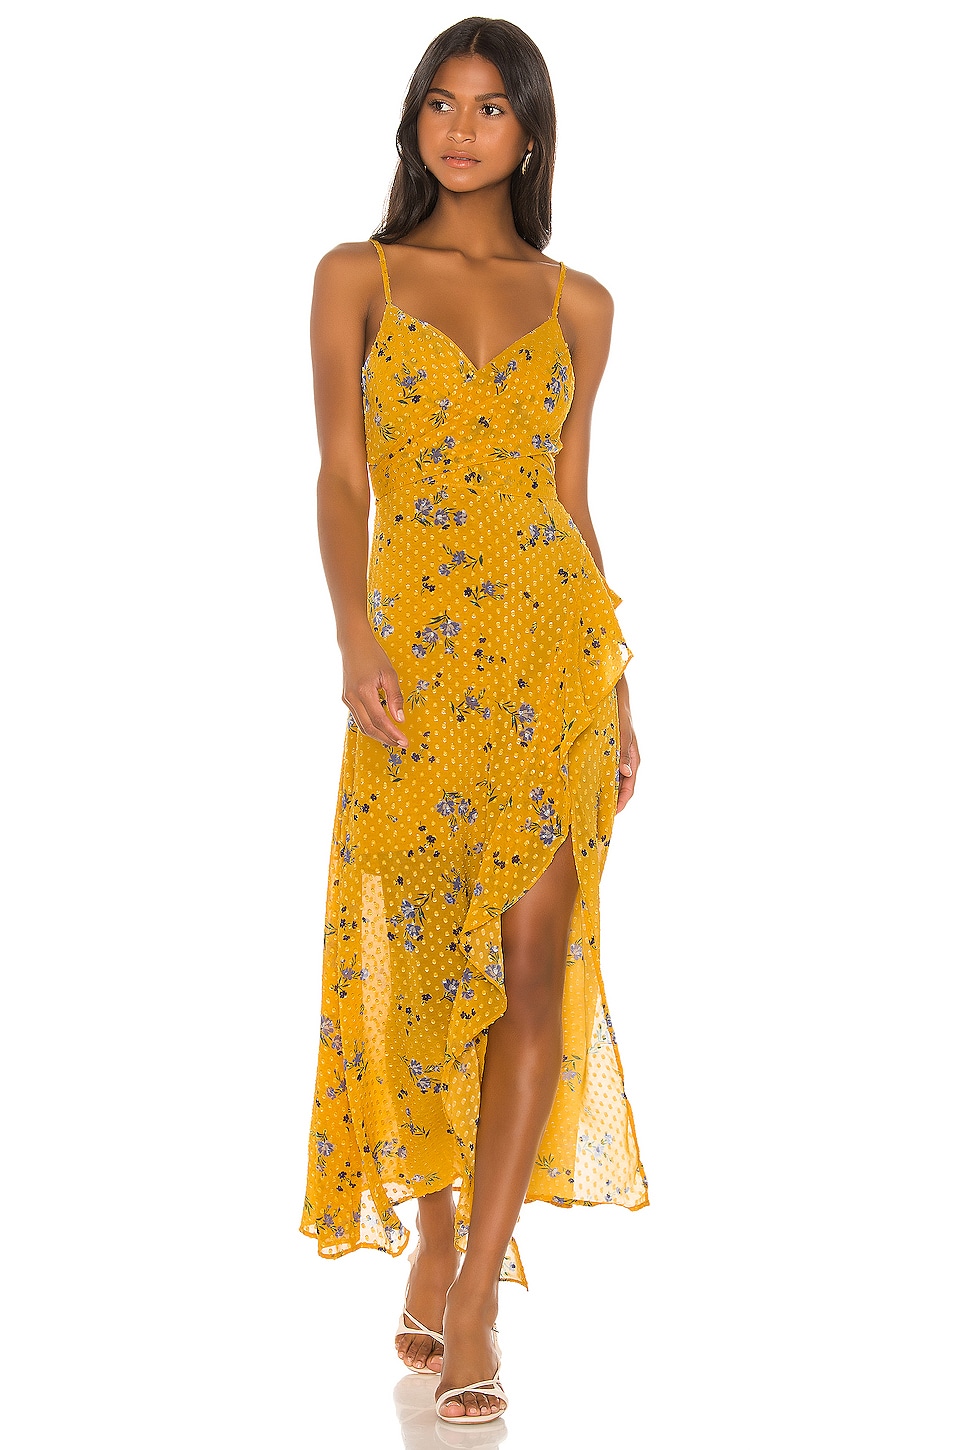 revolve yellow floral dress